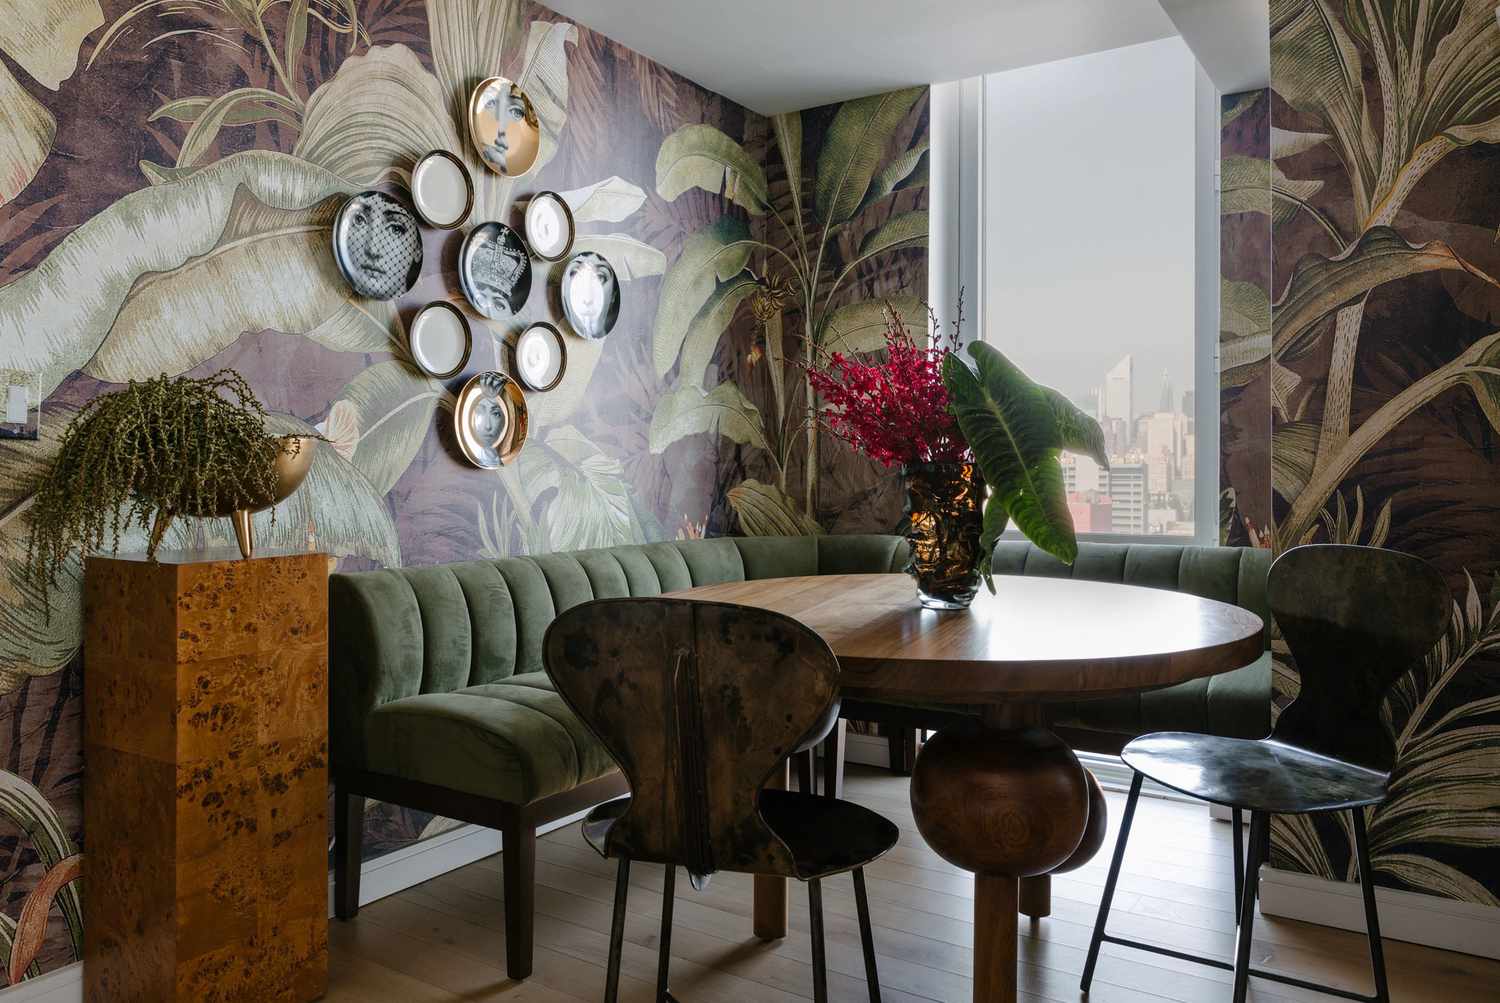 Rainforest themeed wallpaper in dining room